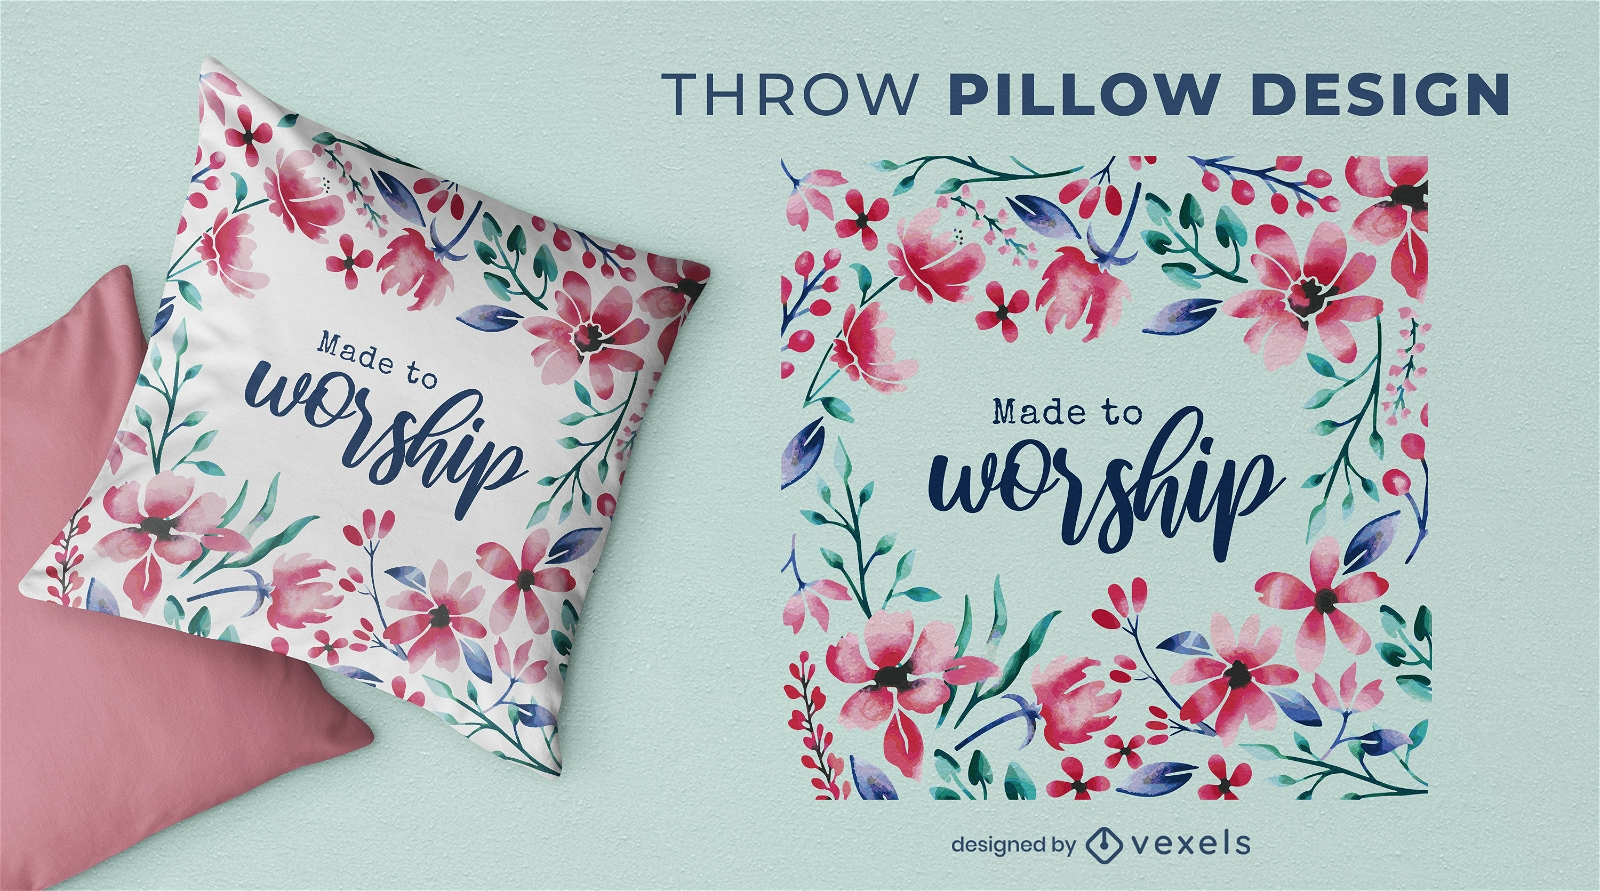 Made to worship floral throw pillow design